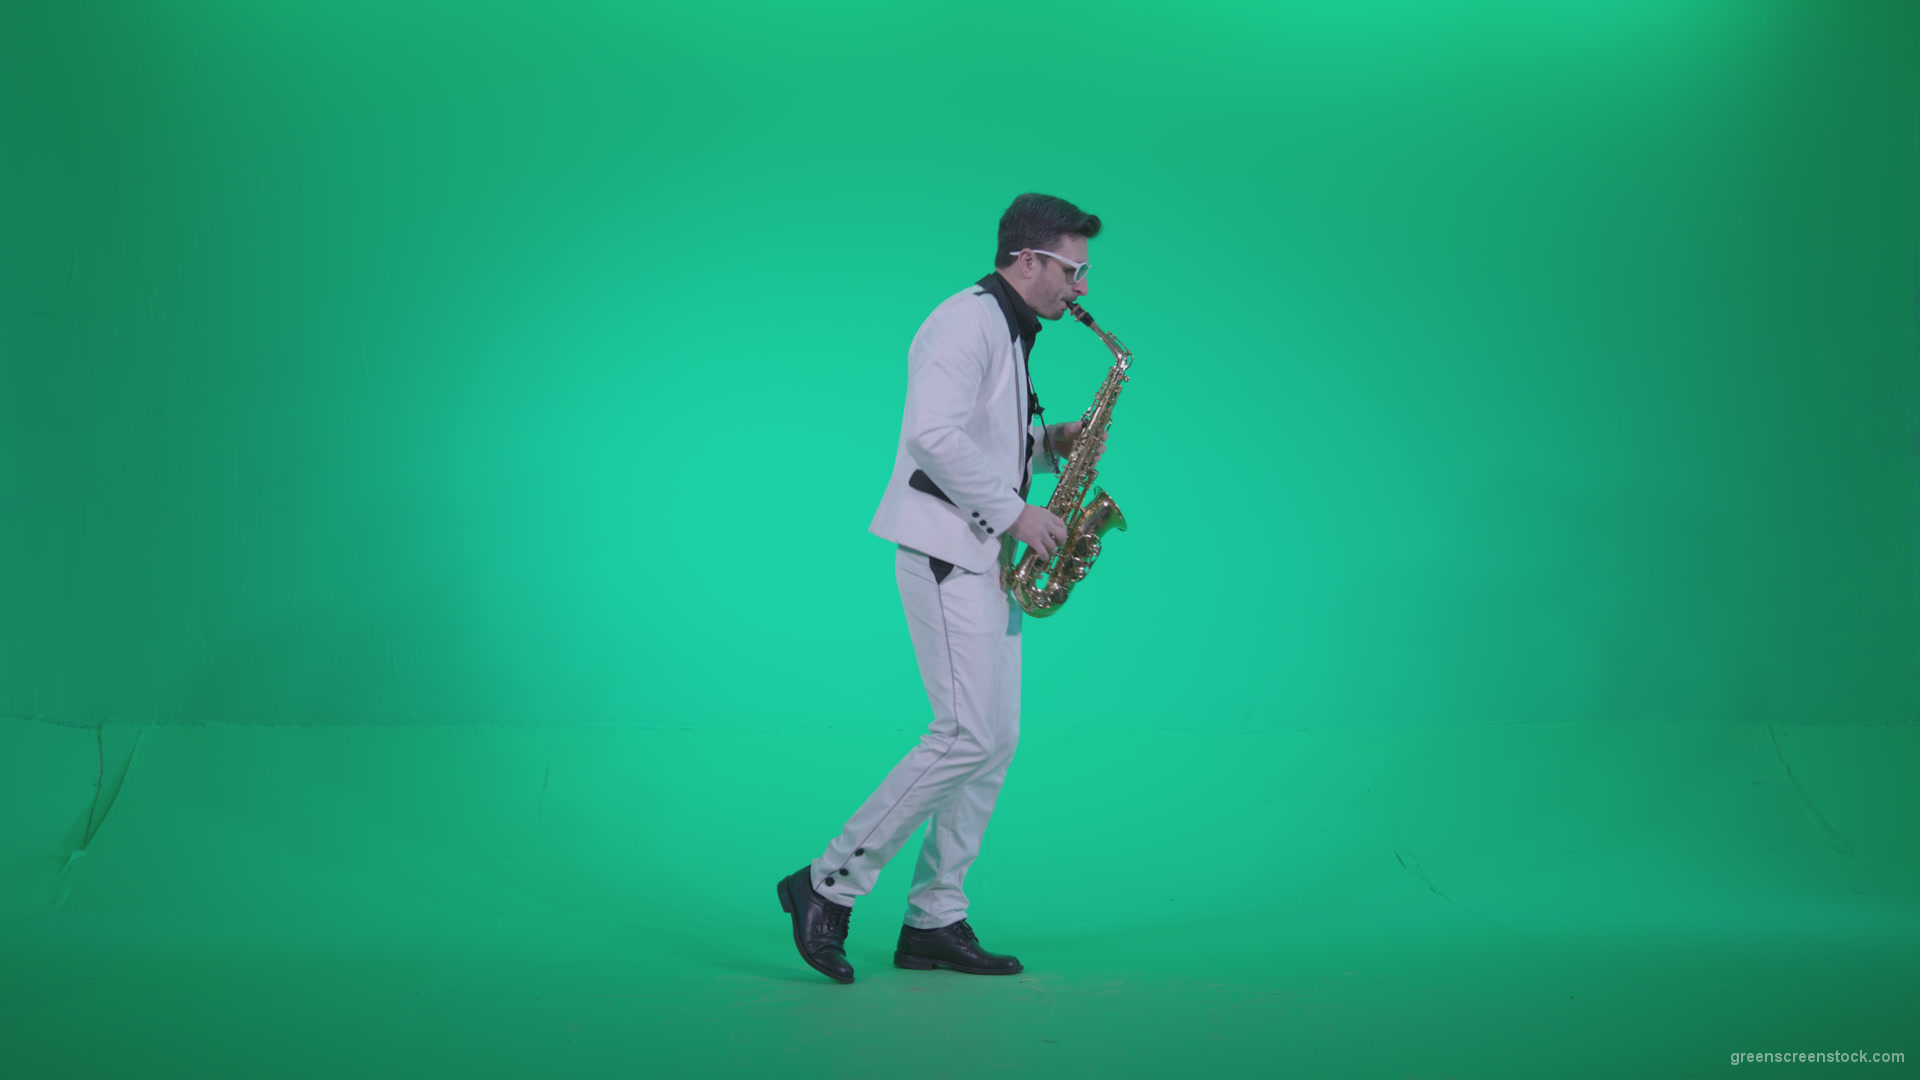 Saxophone-Virtuoso-Performer-s2_006 Green Screen Stock